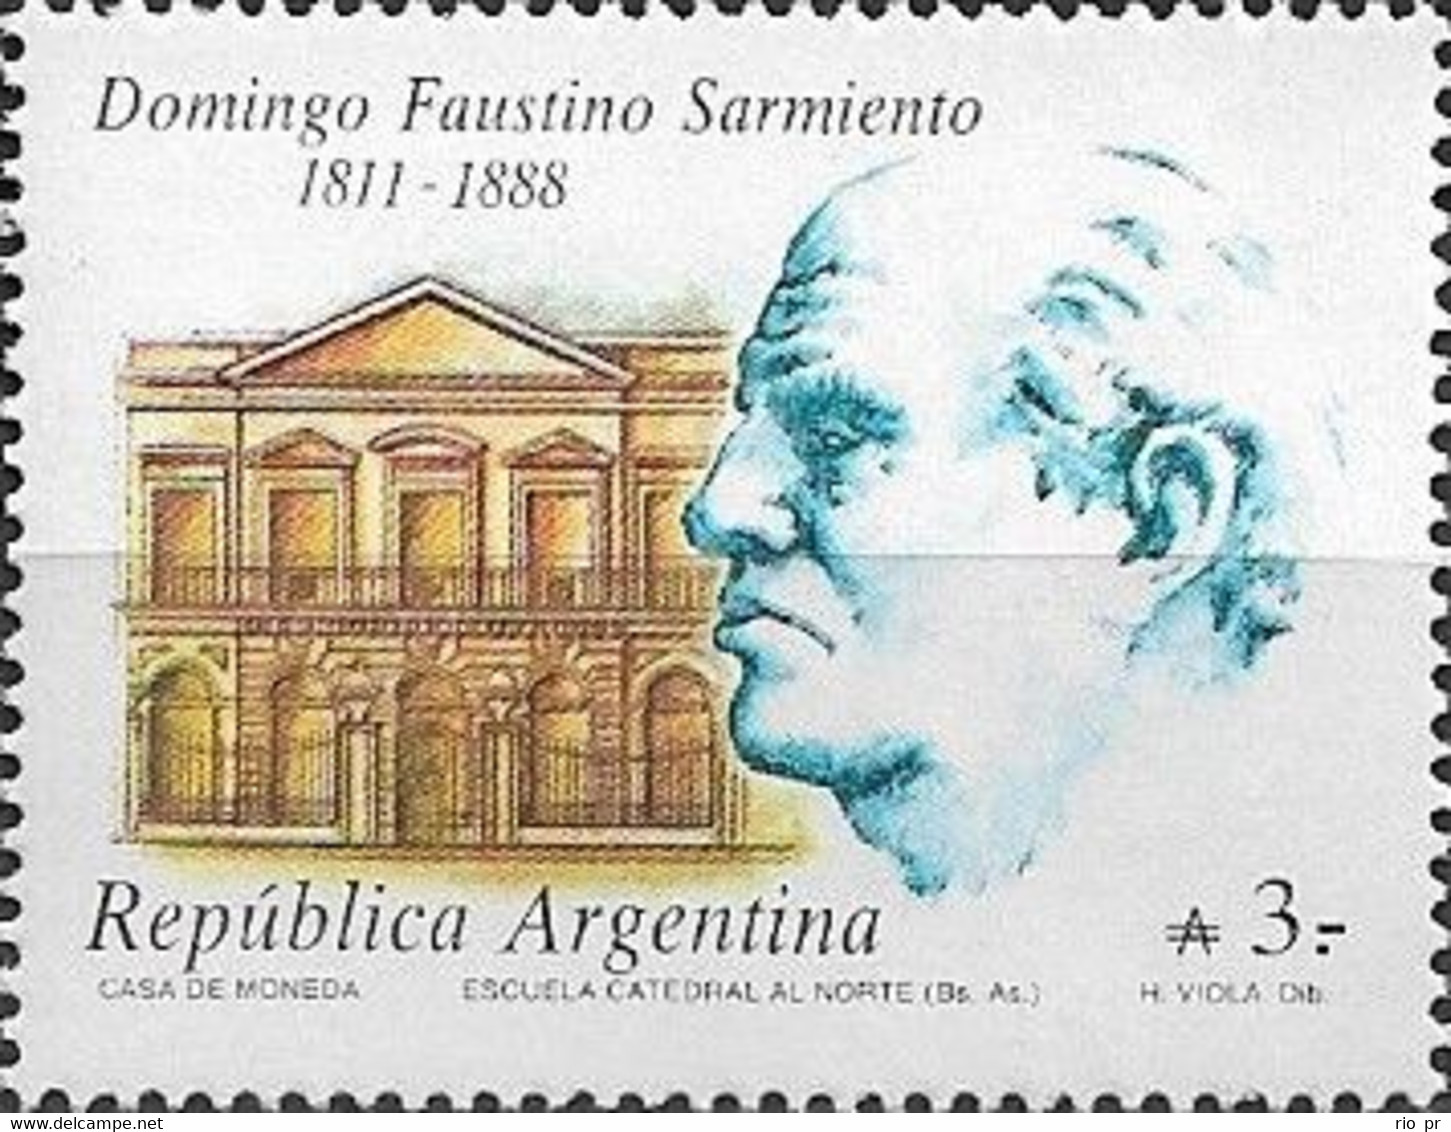 ARGENTINA - DEATH CENTENARY OF DOMINGO FAUSTINO SARMIENTO (1811-1888), ARGENTINE ACTIVIST/STATESMAN 1988 - MNH - Neufs